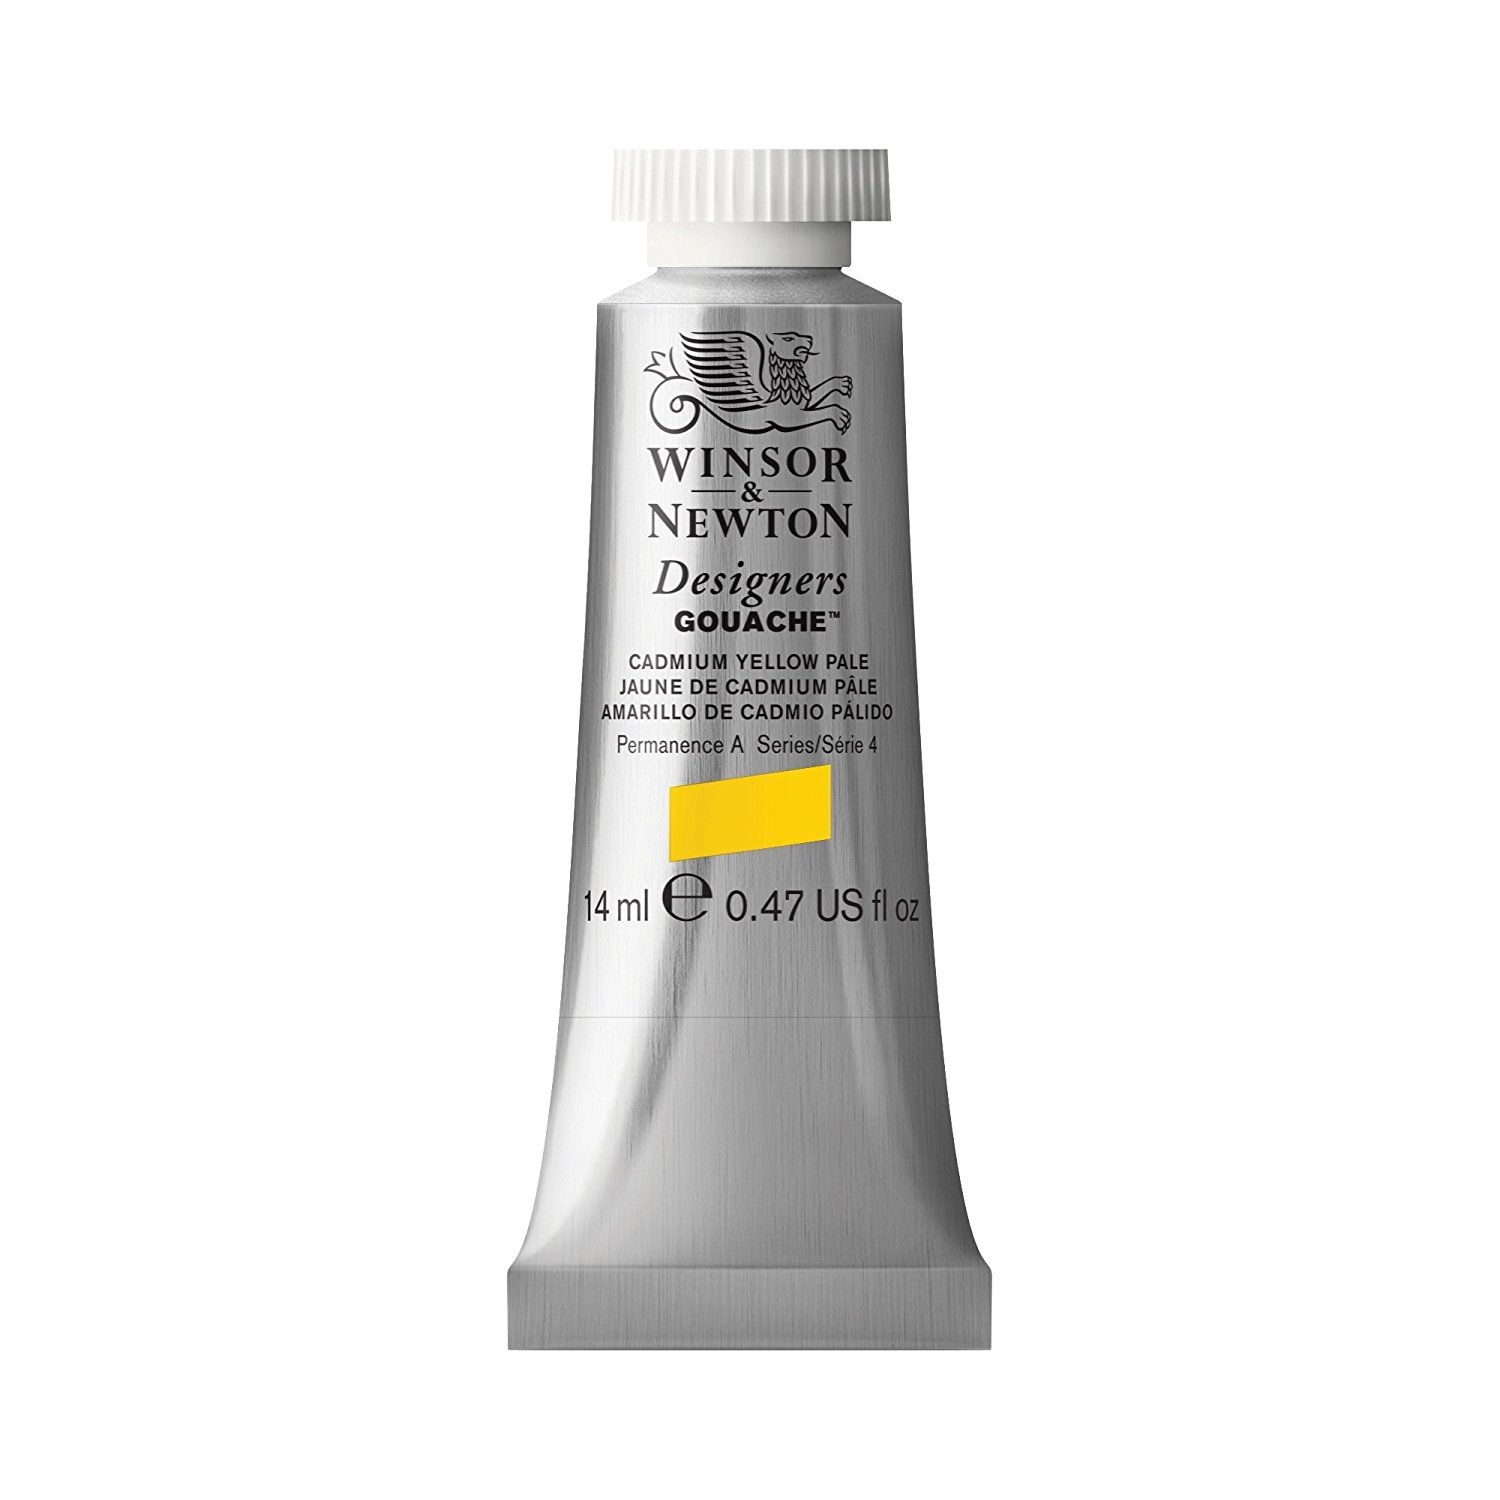 Designers Gouache - Cadmium Yellow Pale 14ml